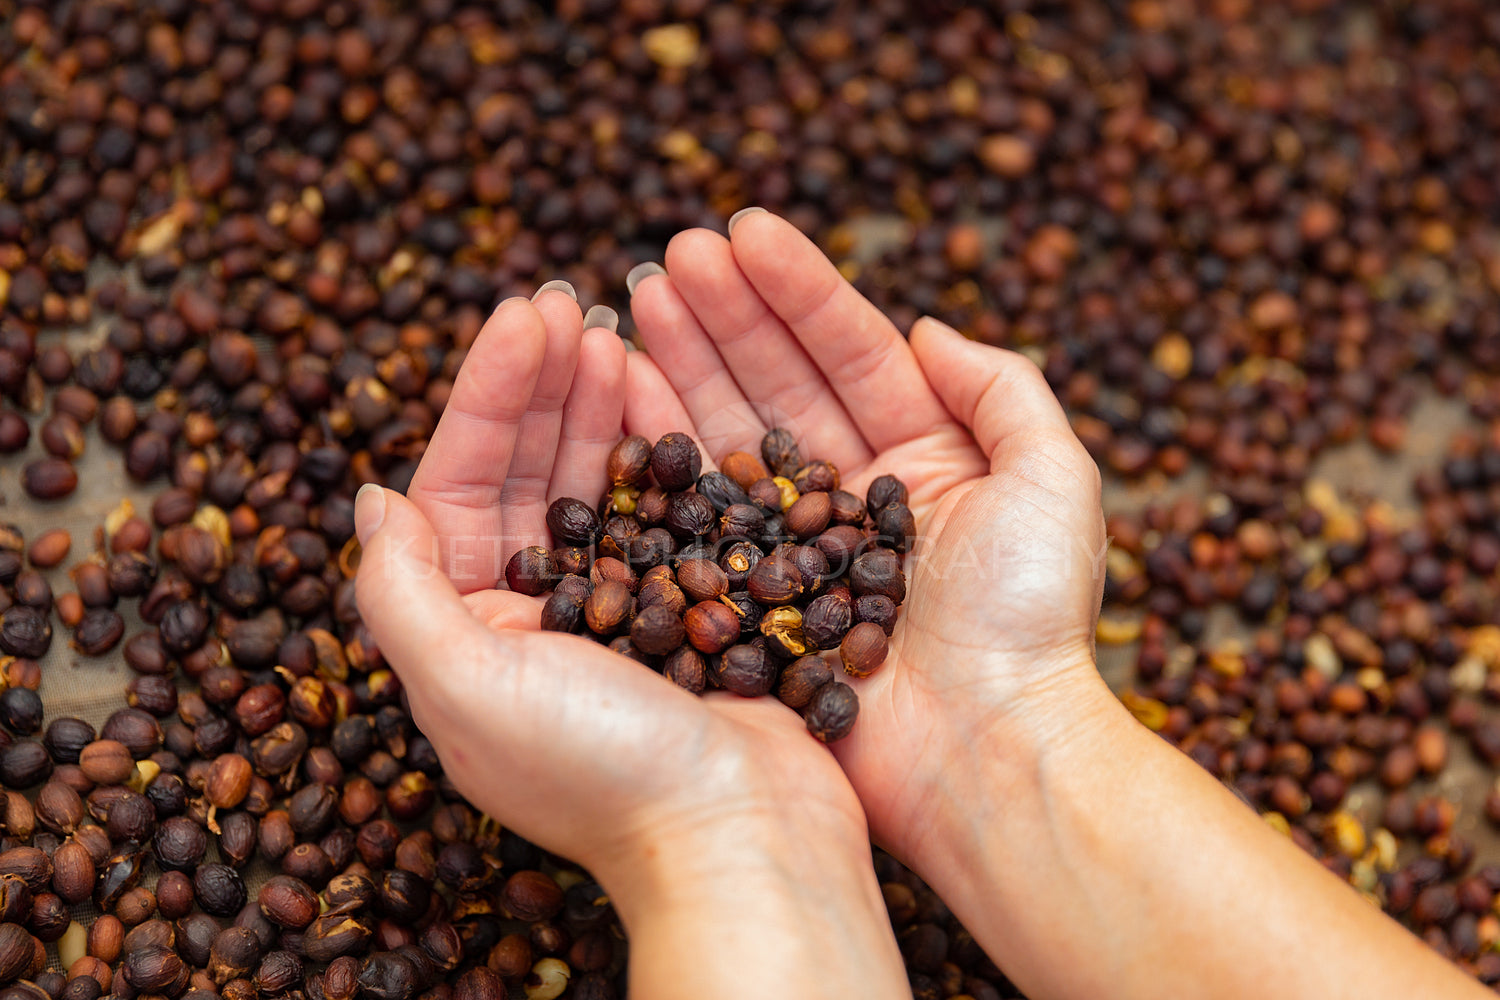 Female Employee Examines Dried Organic Raw Coffee Fruit Beans